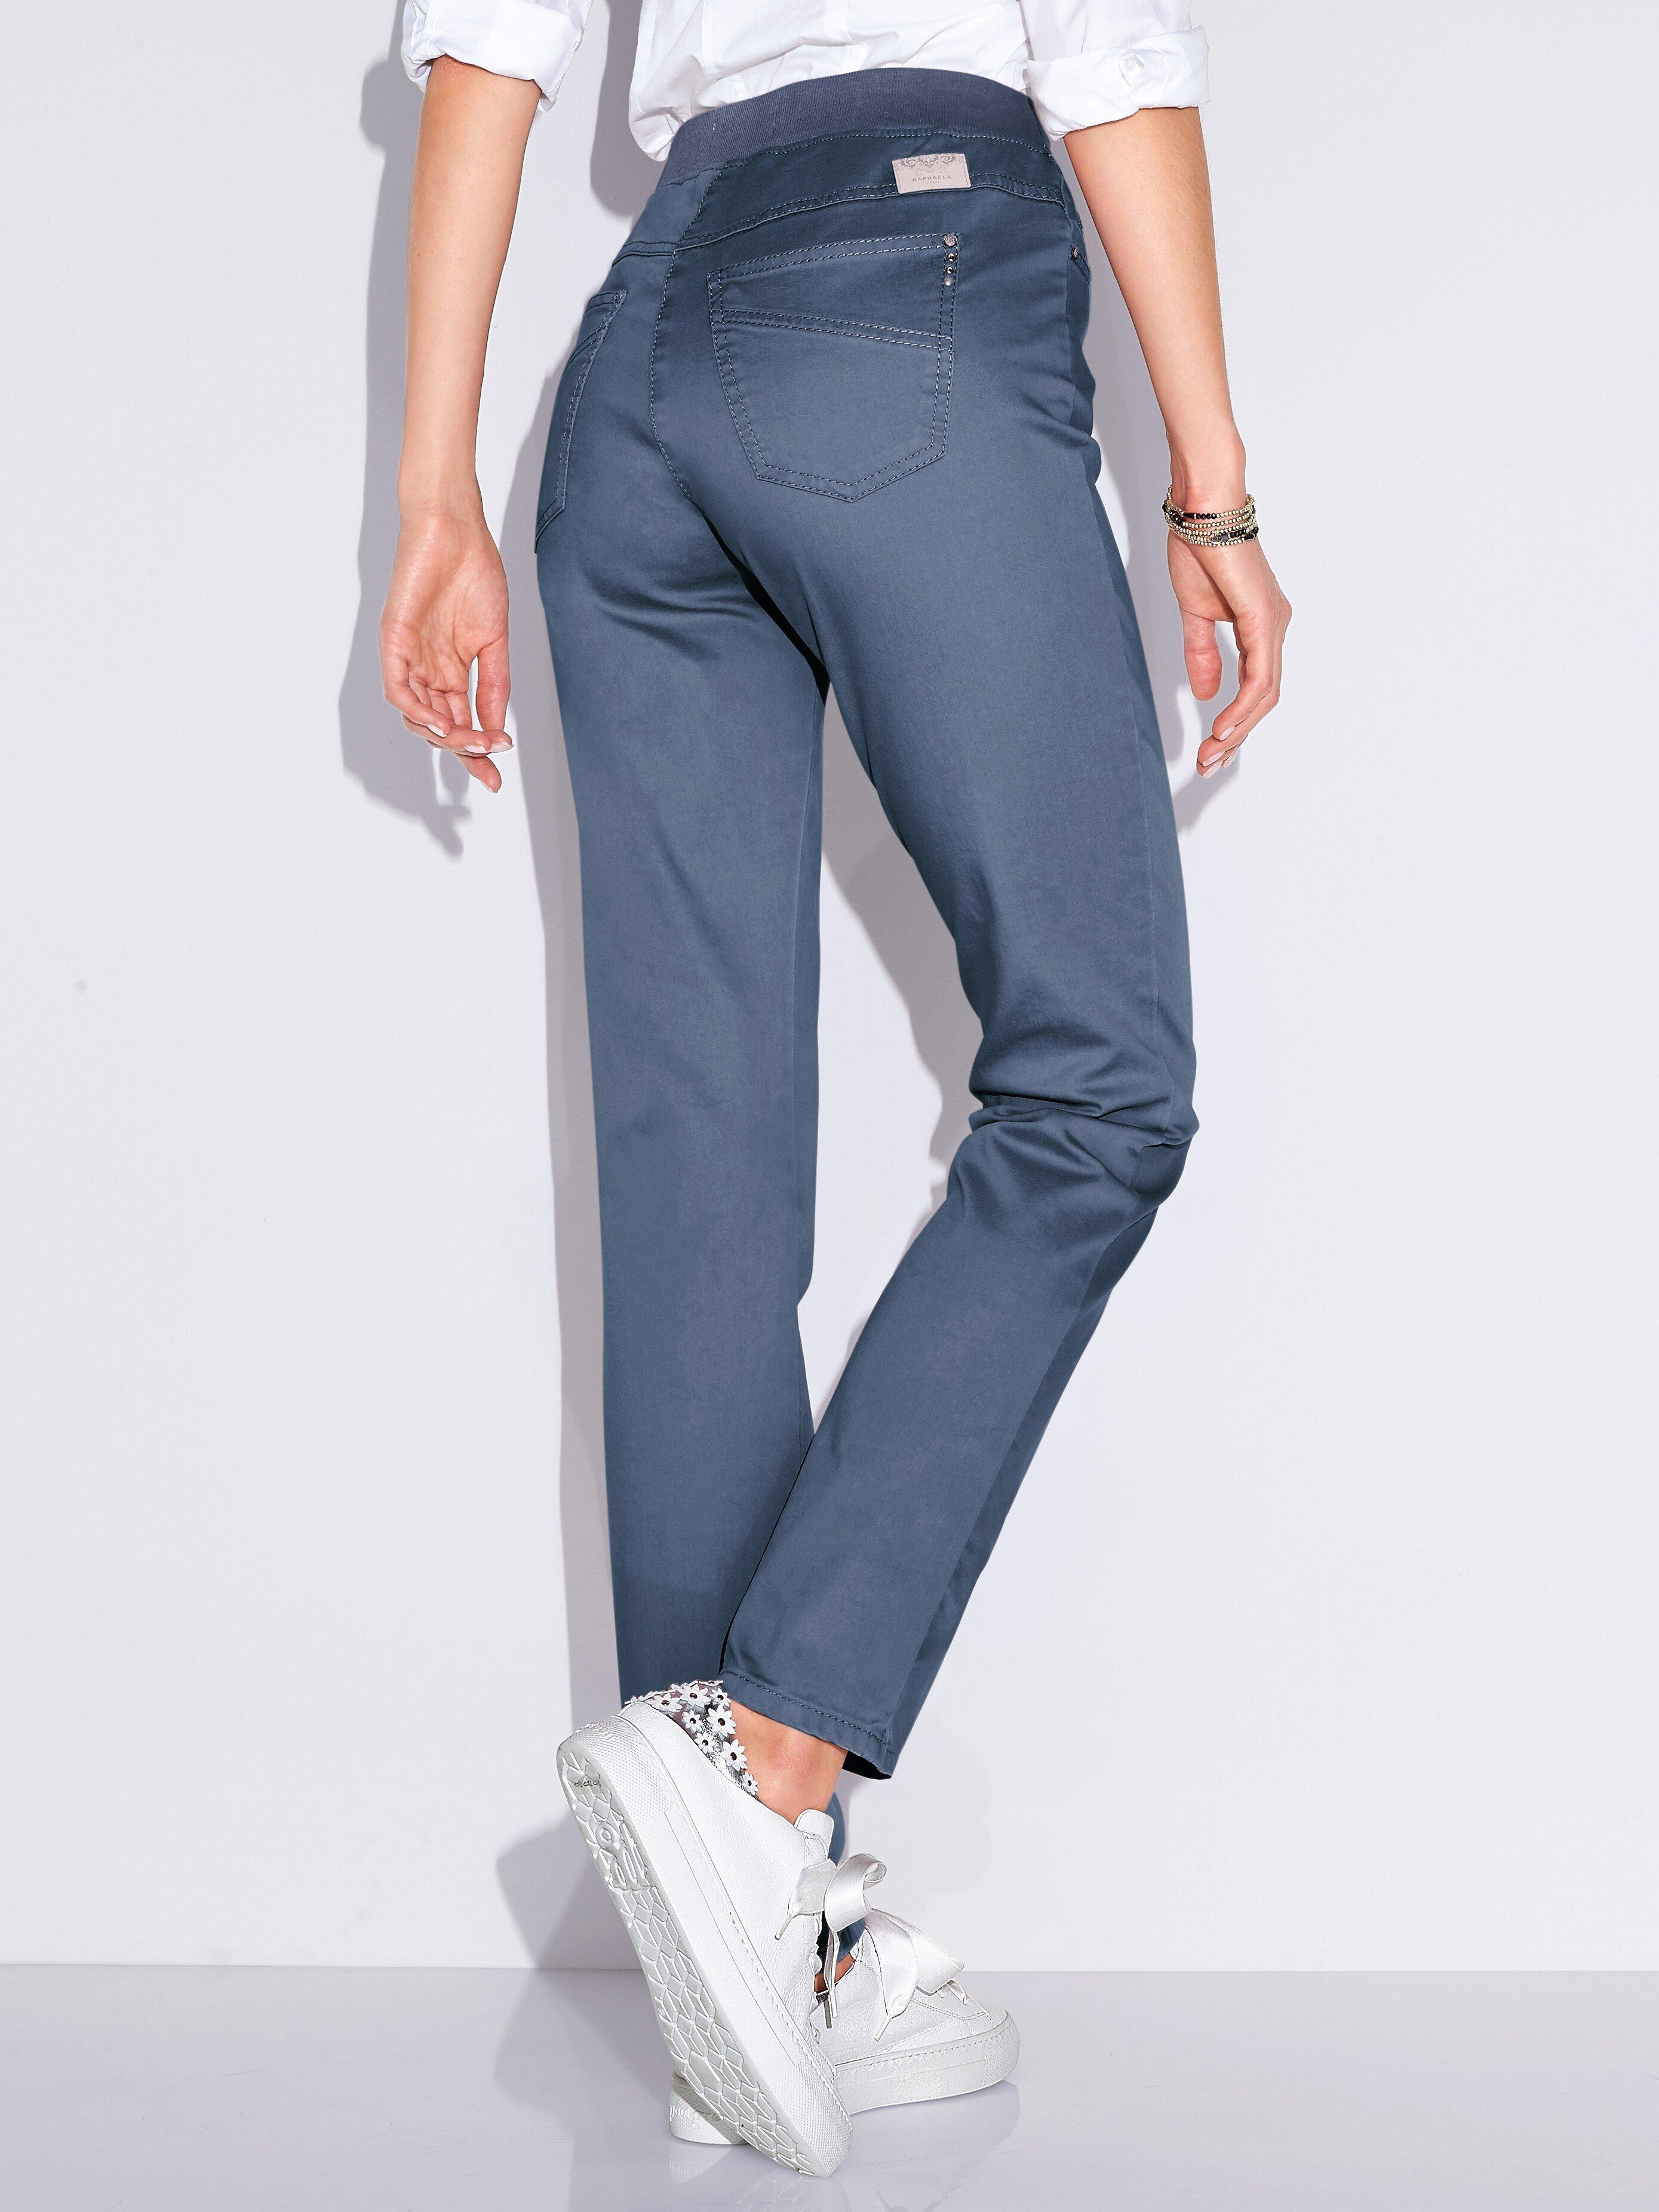 Raphaela by Brax - Comfort Plus-jeans model Carina